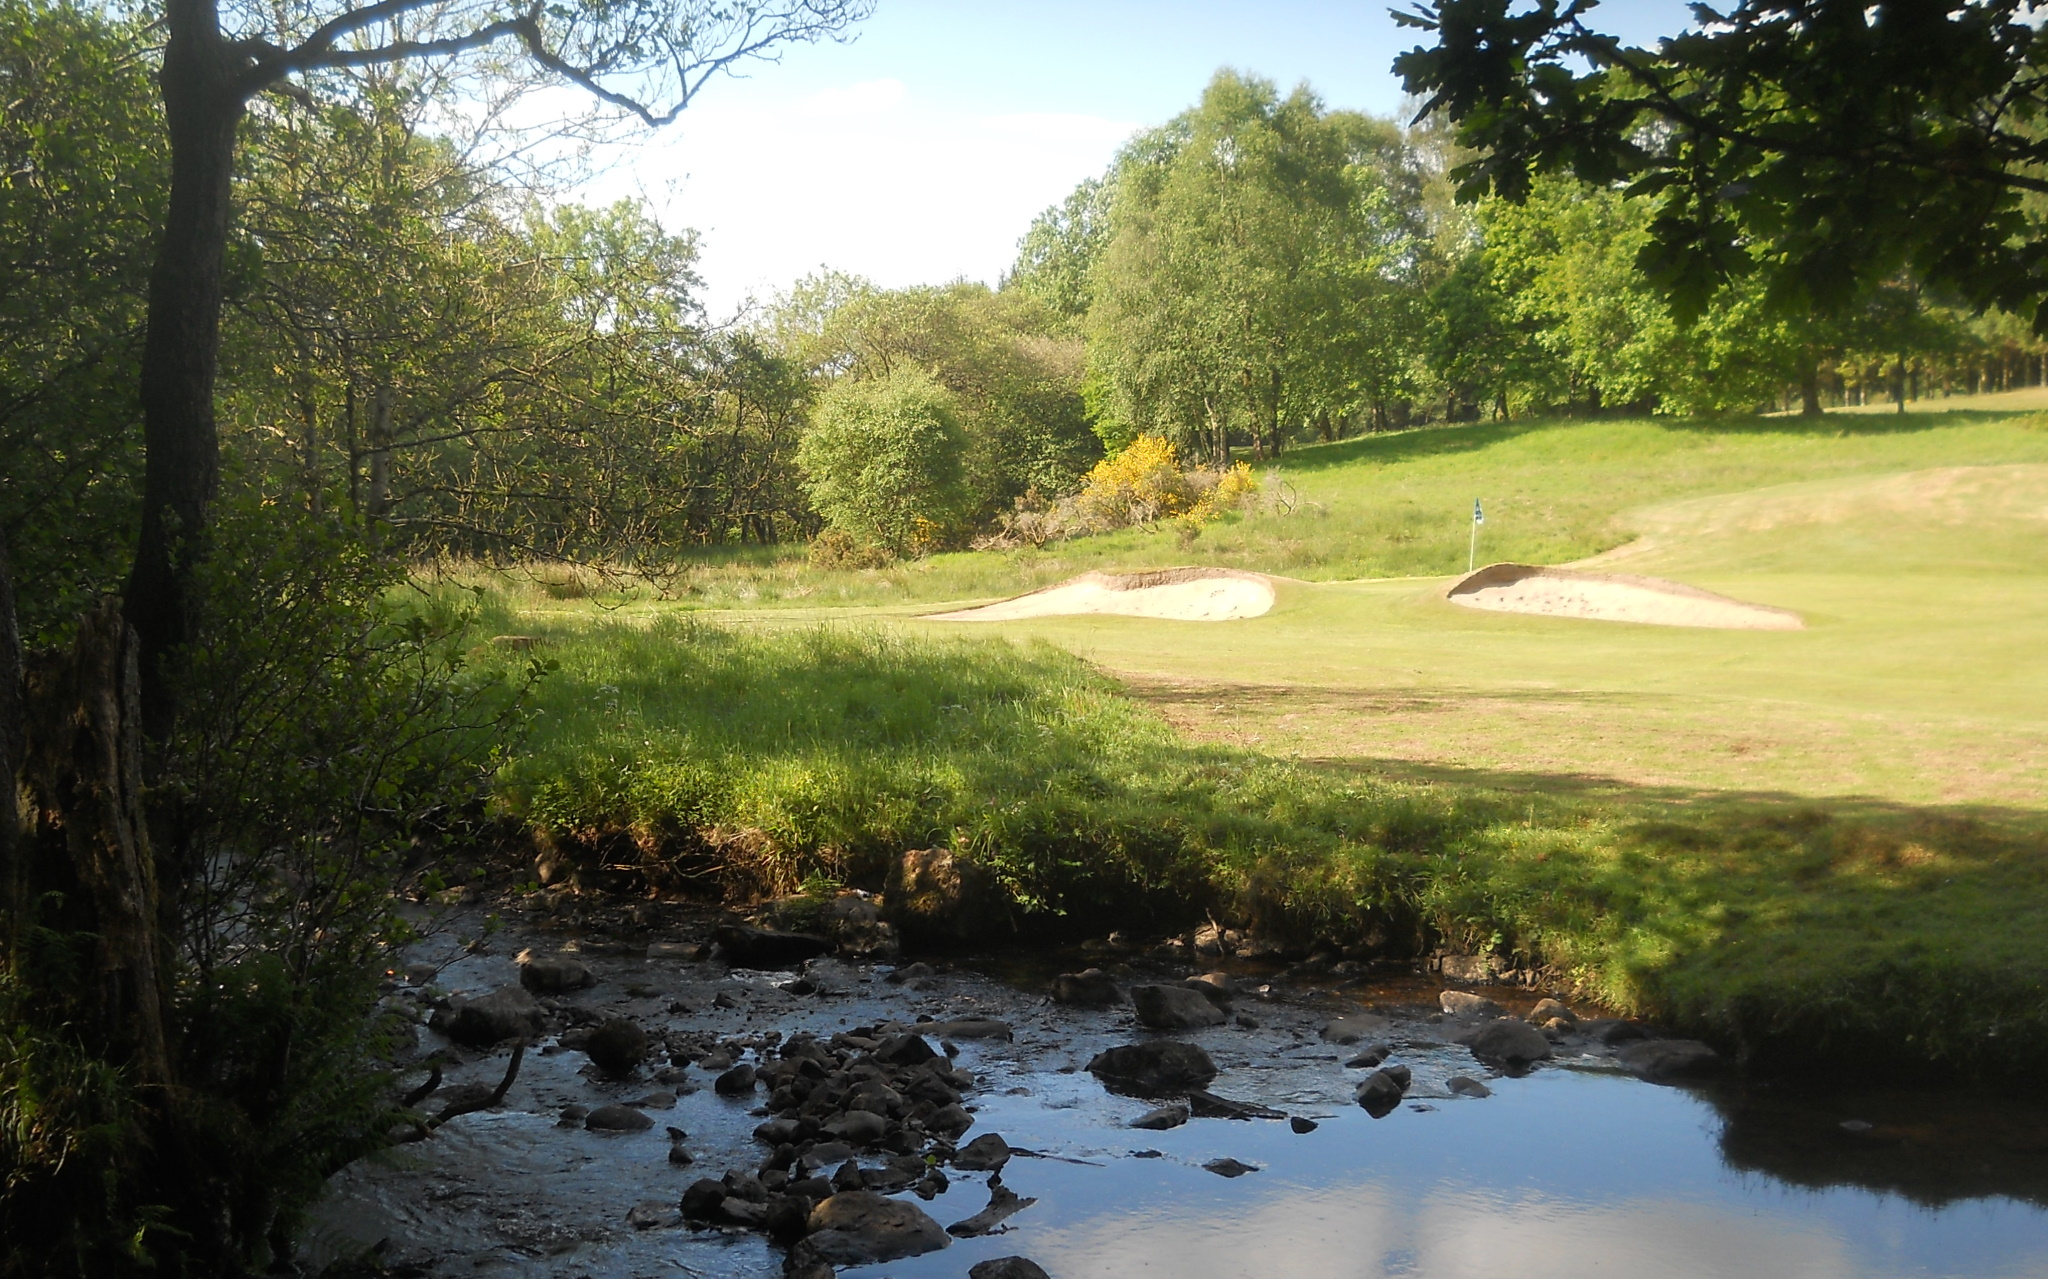 Milngavie Golf Club from Mugdock Country Park